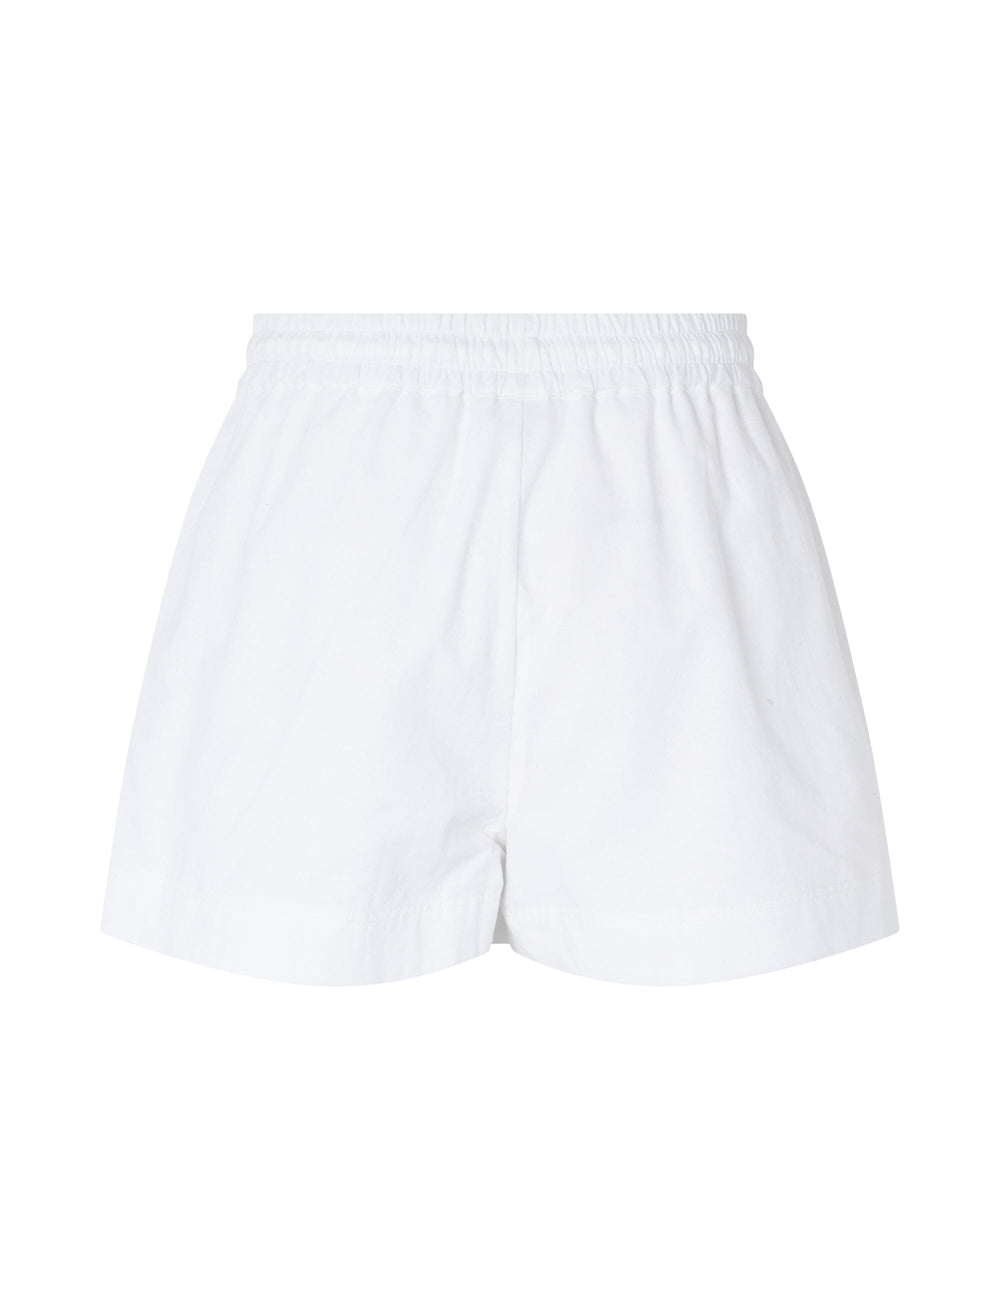 Mbym - Meris-M - 800 White Shorts 